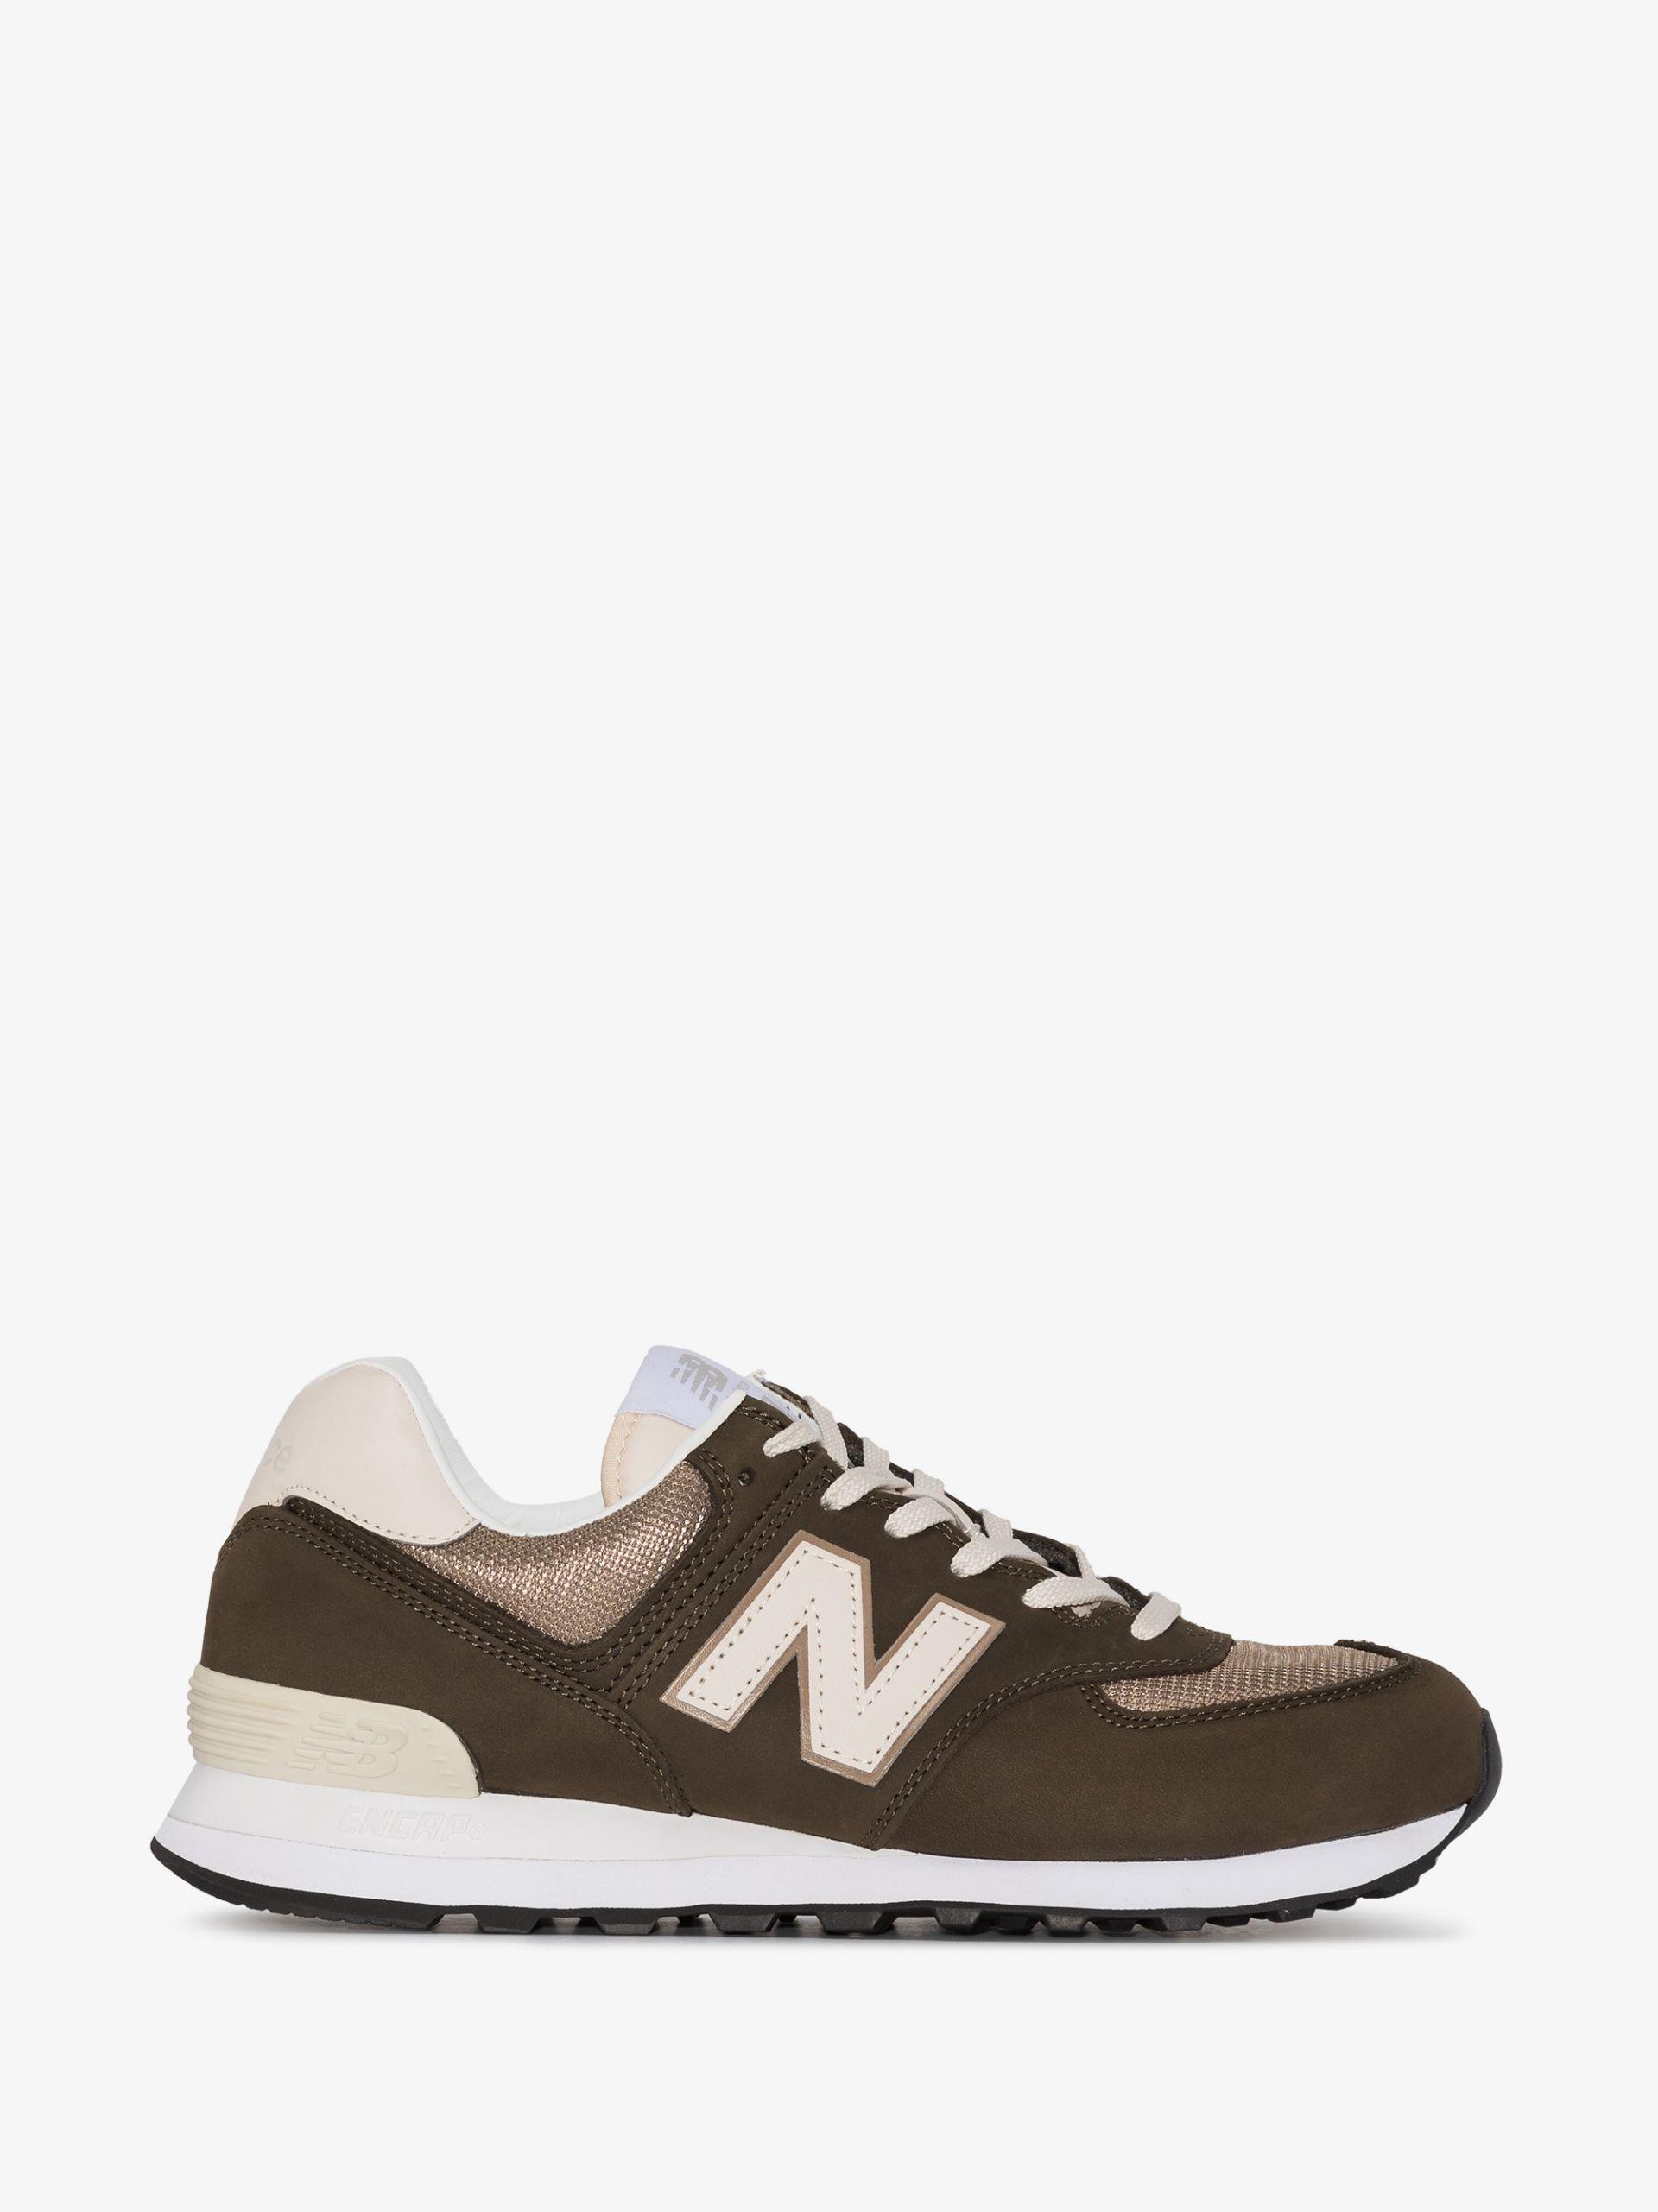 New Balance 574 Nubuck Sneakers in Brown | Lyst